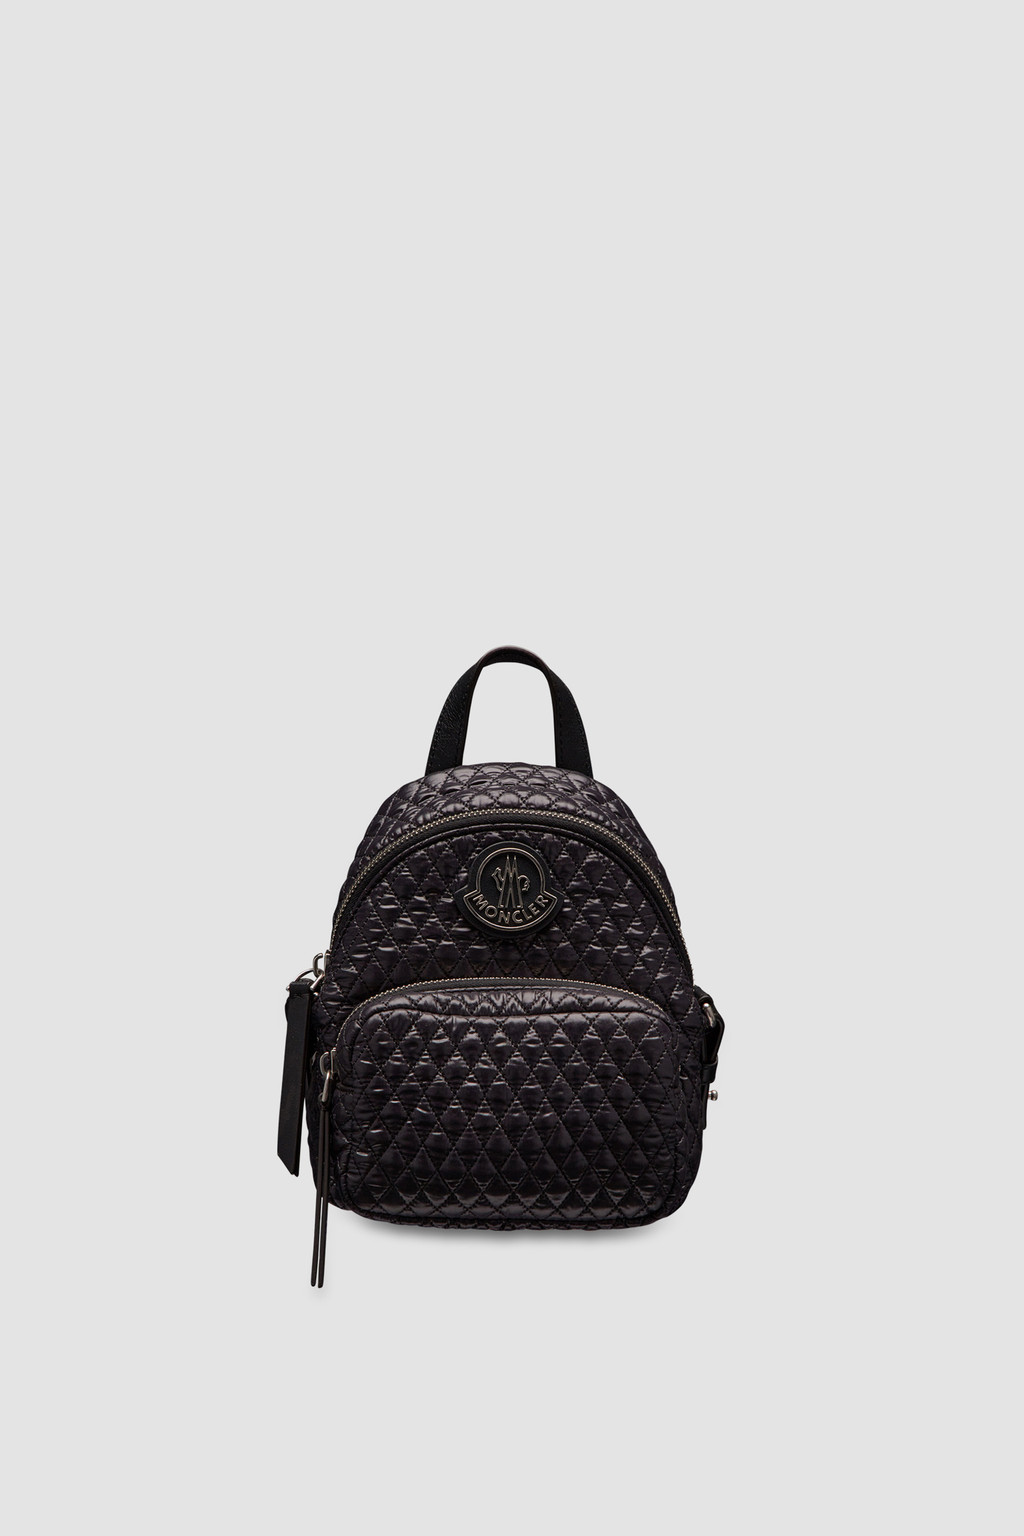 Moncler Cut Backpack 5A00006M1574999 | eBay